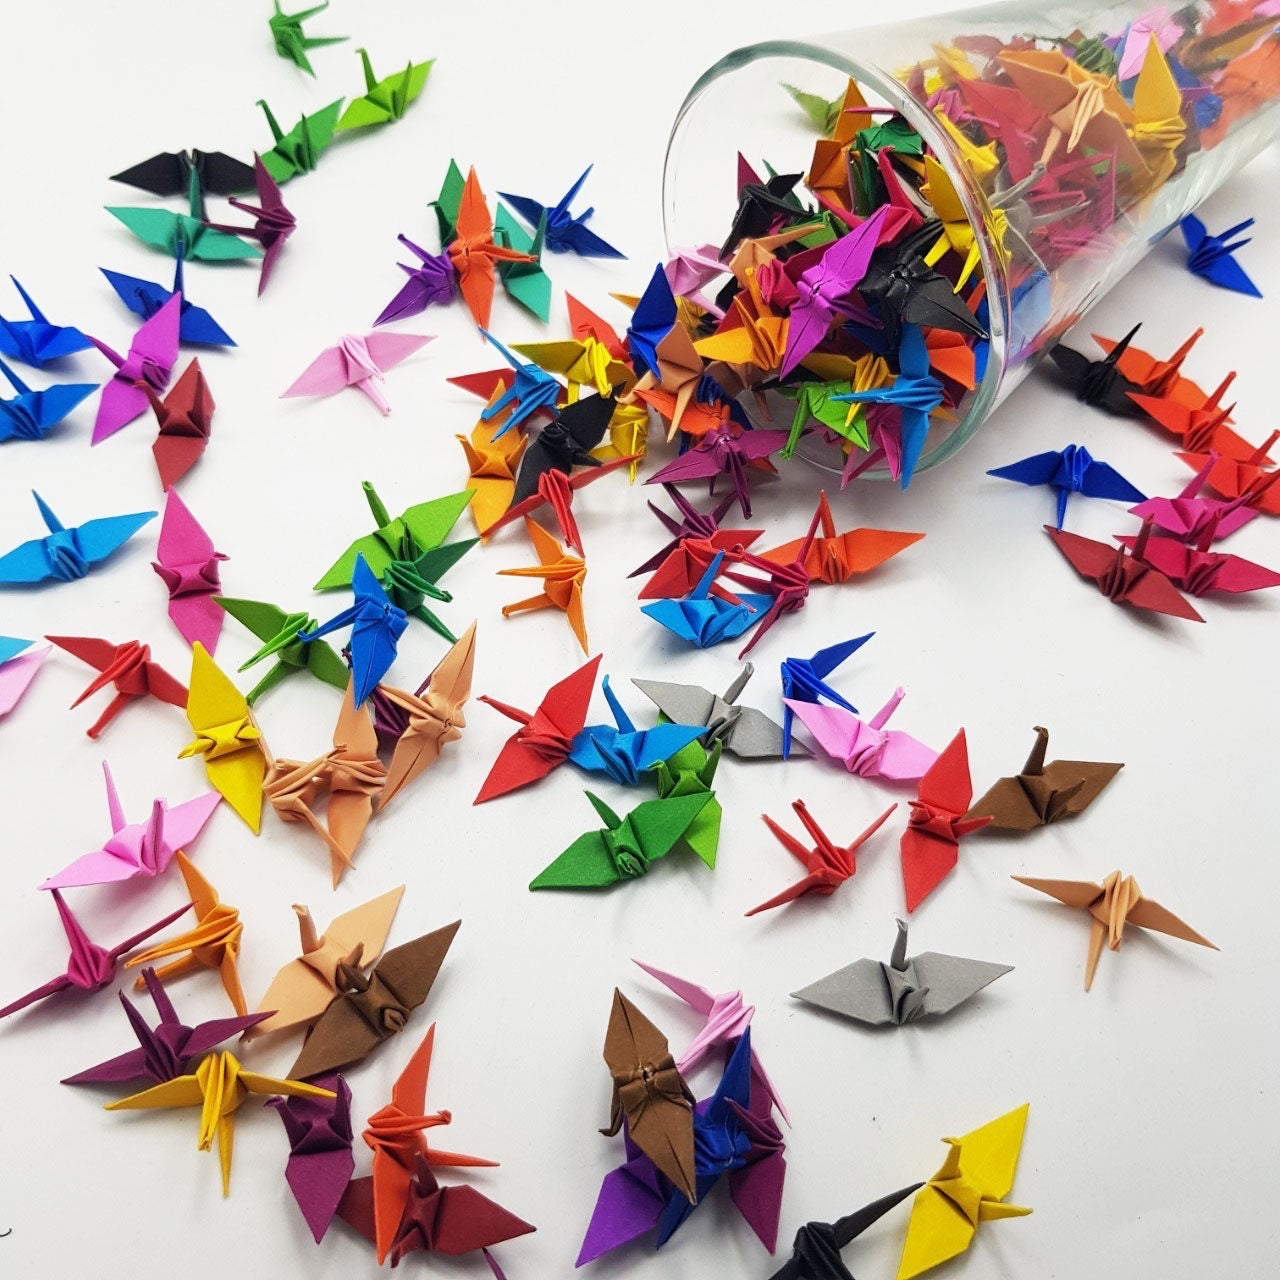 100 Rainbow Color Origami Paper Crane Origami Crane Made of 3.81cm (1.5 inches) for Wedding Decor